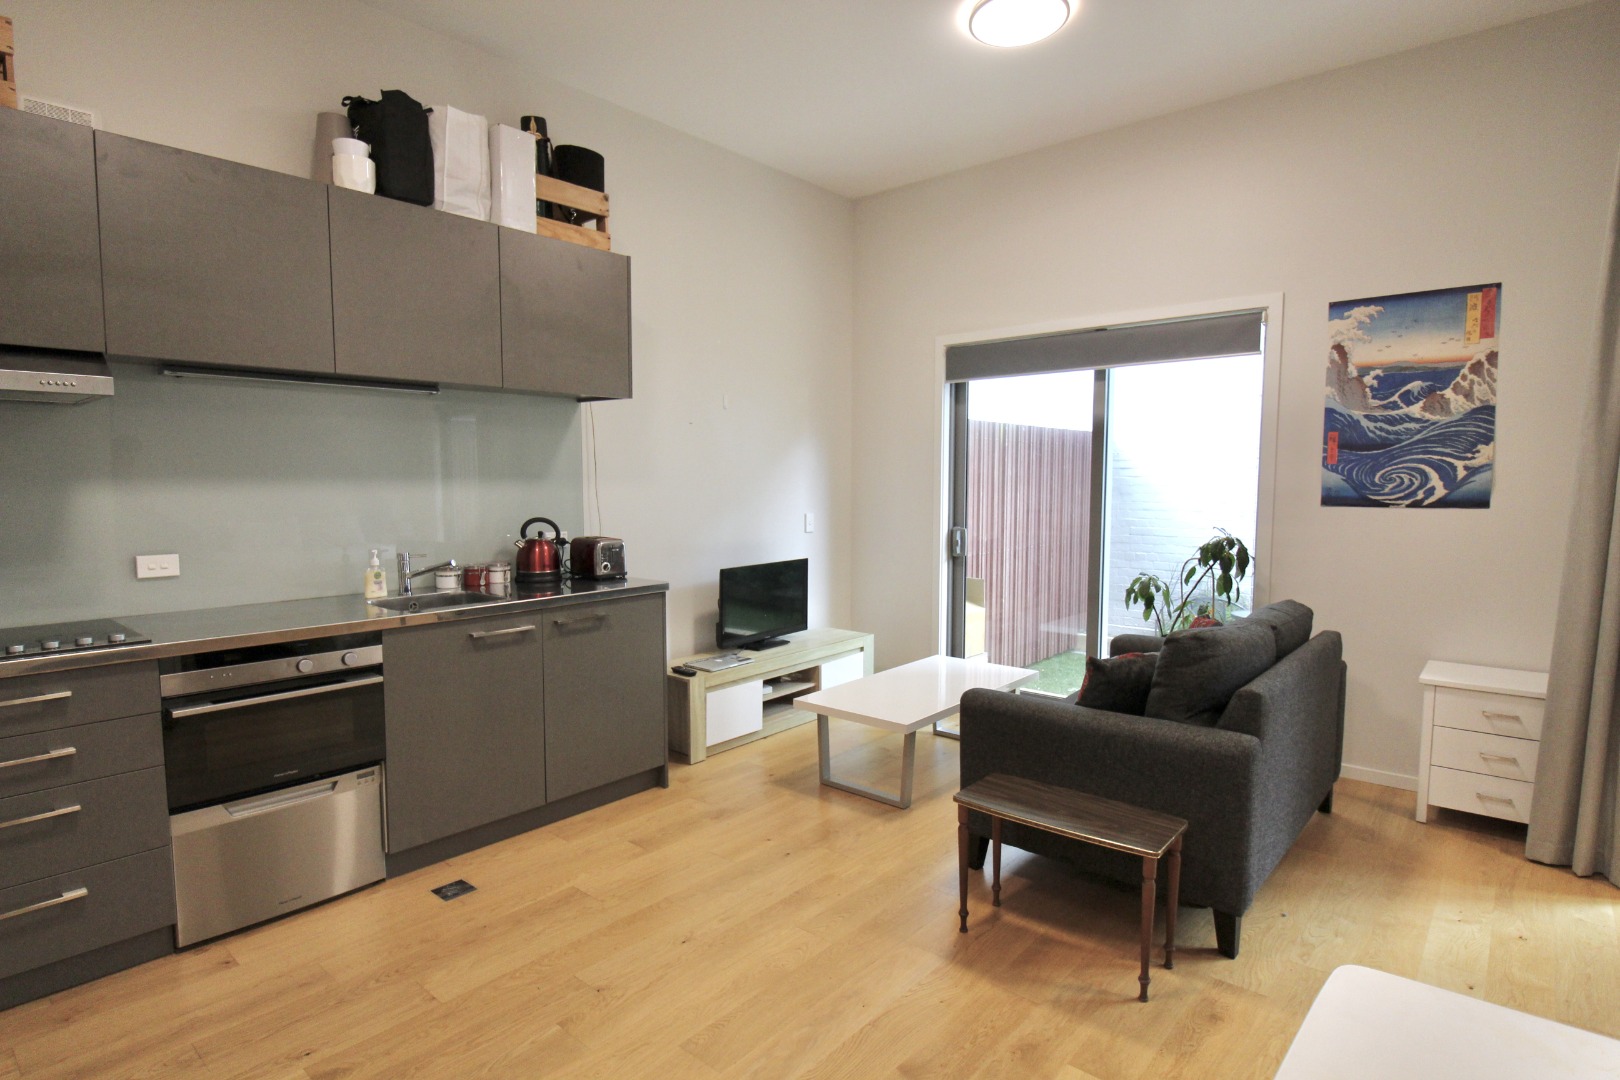 Real Estate For Rent Houses & Apartments : Modern Studio Apartment, Wellington